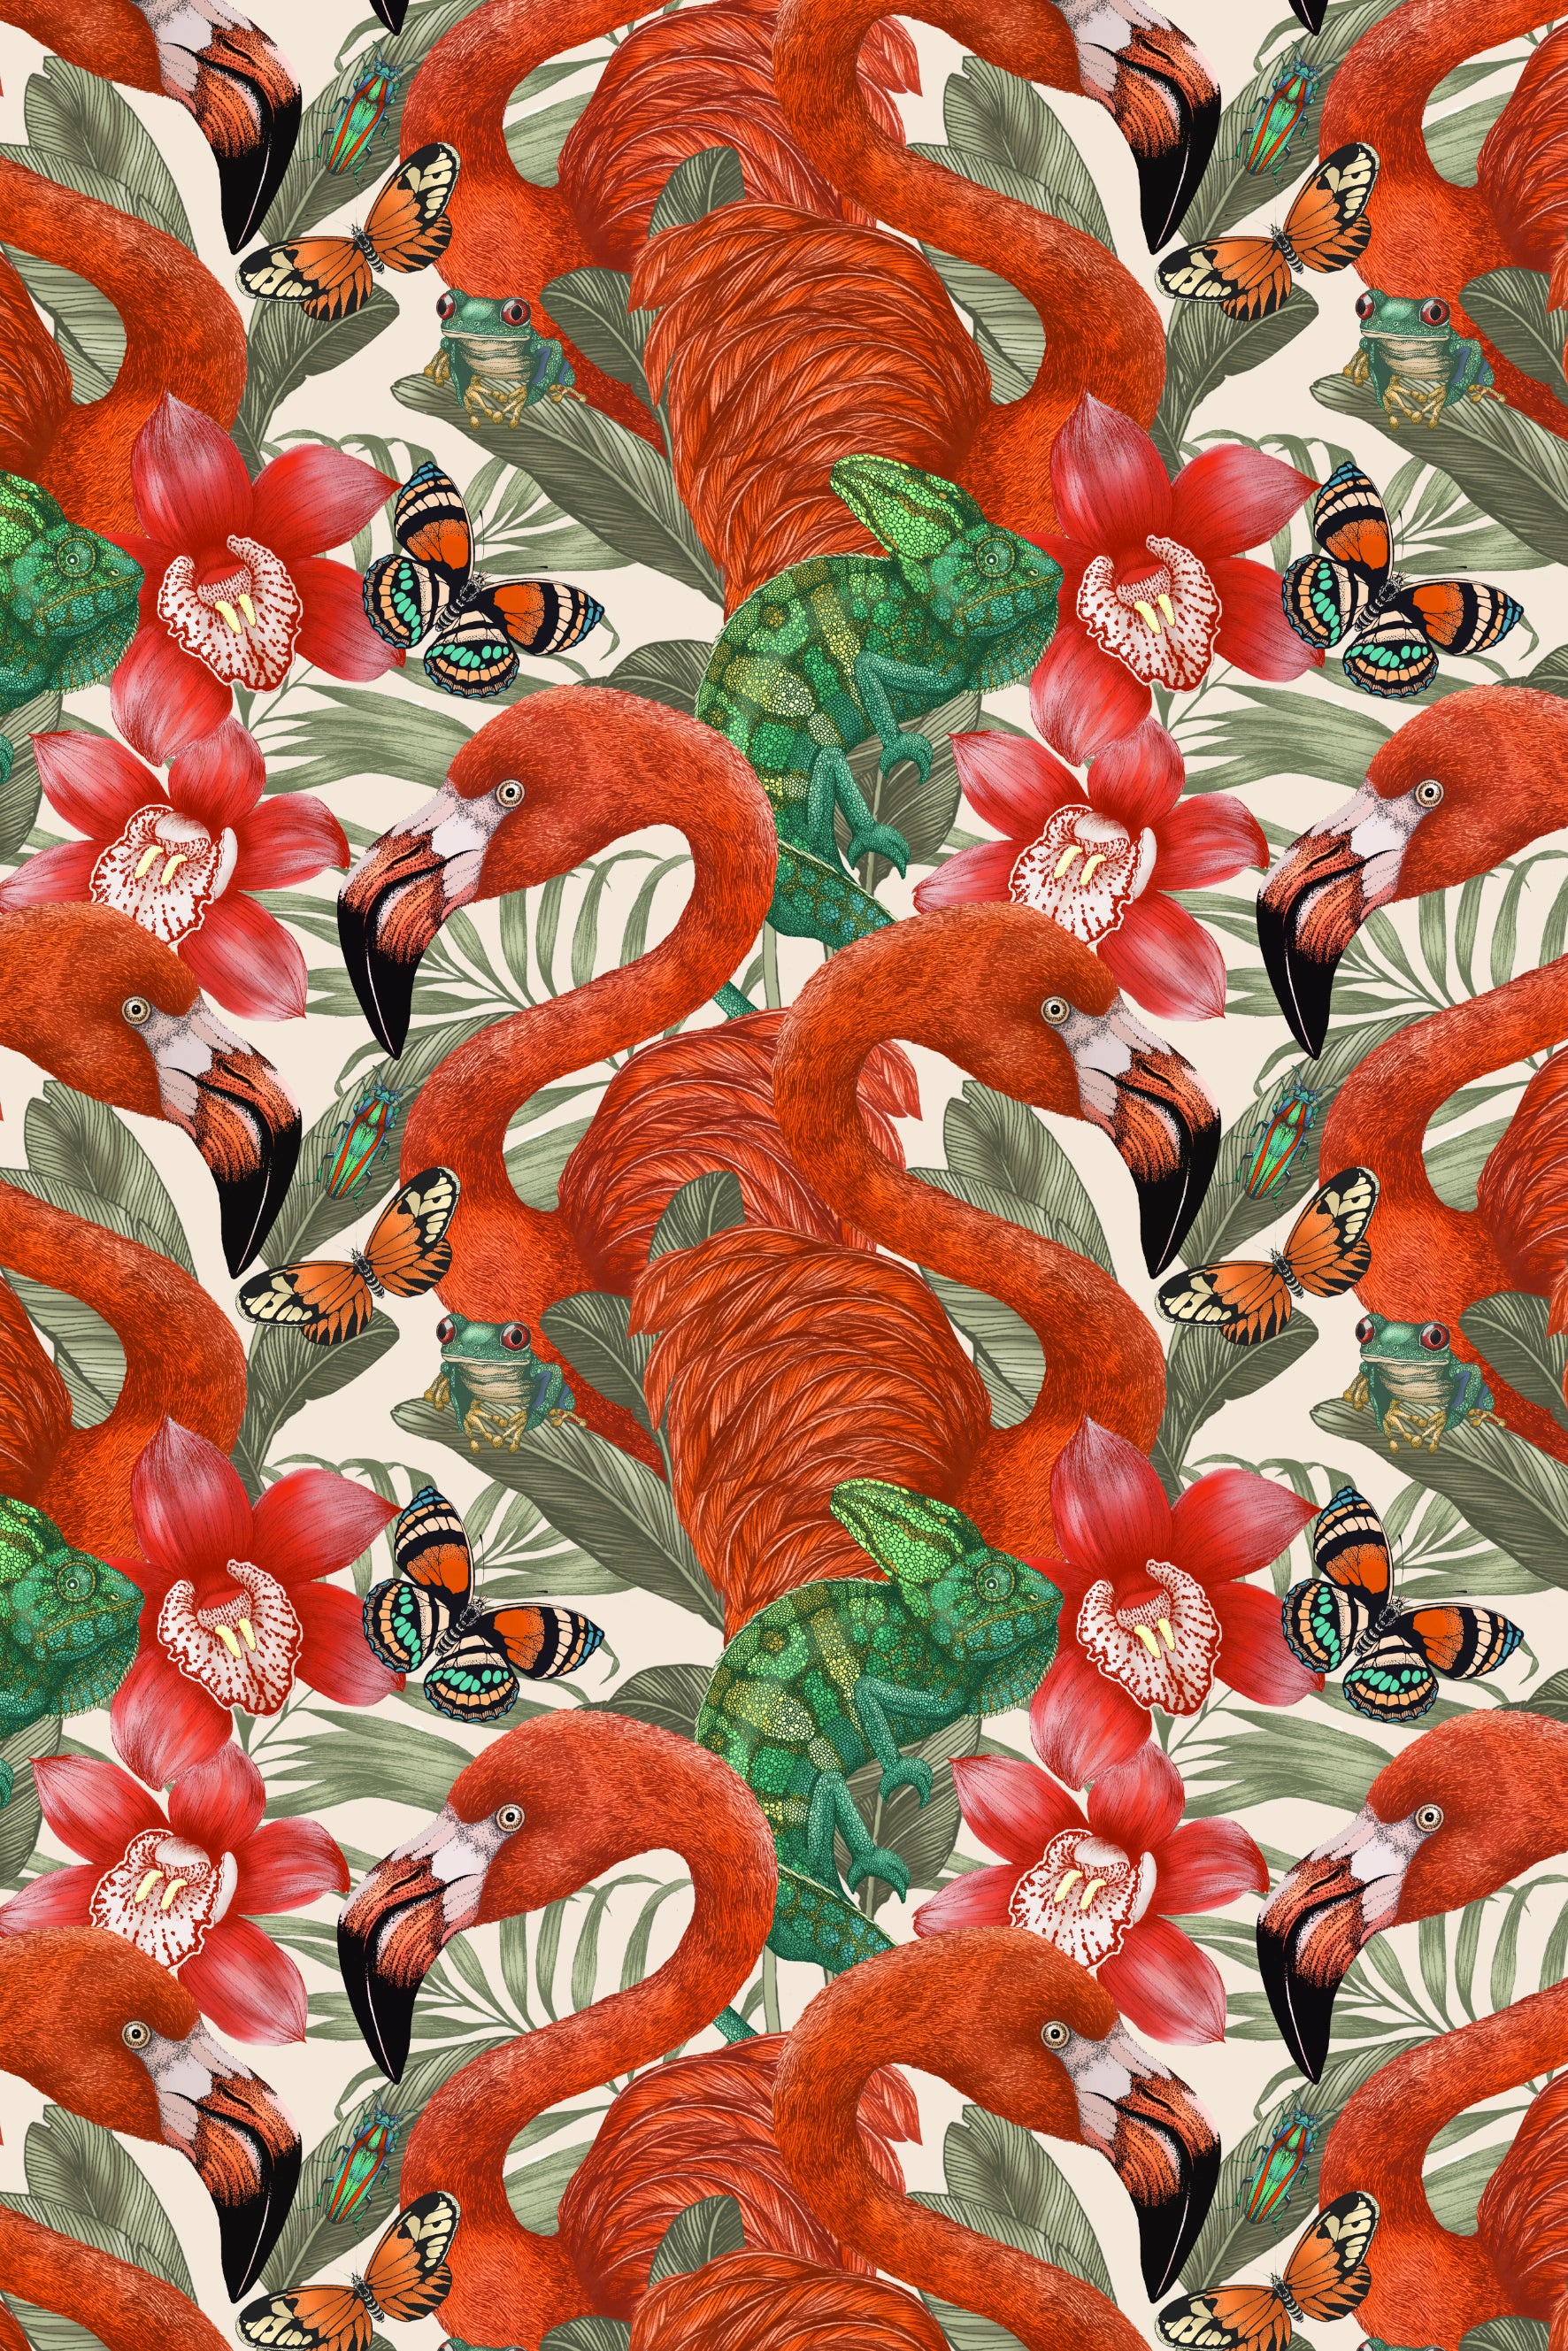 The Tropical Flamingo Wallpaper